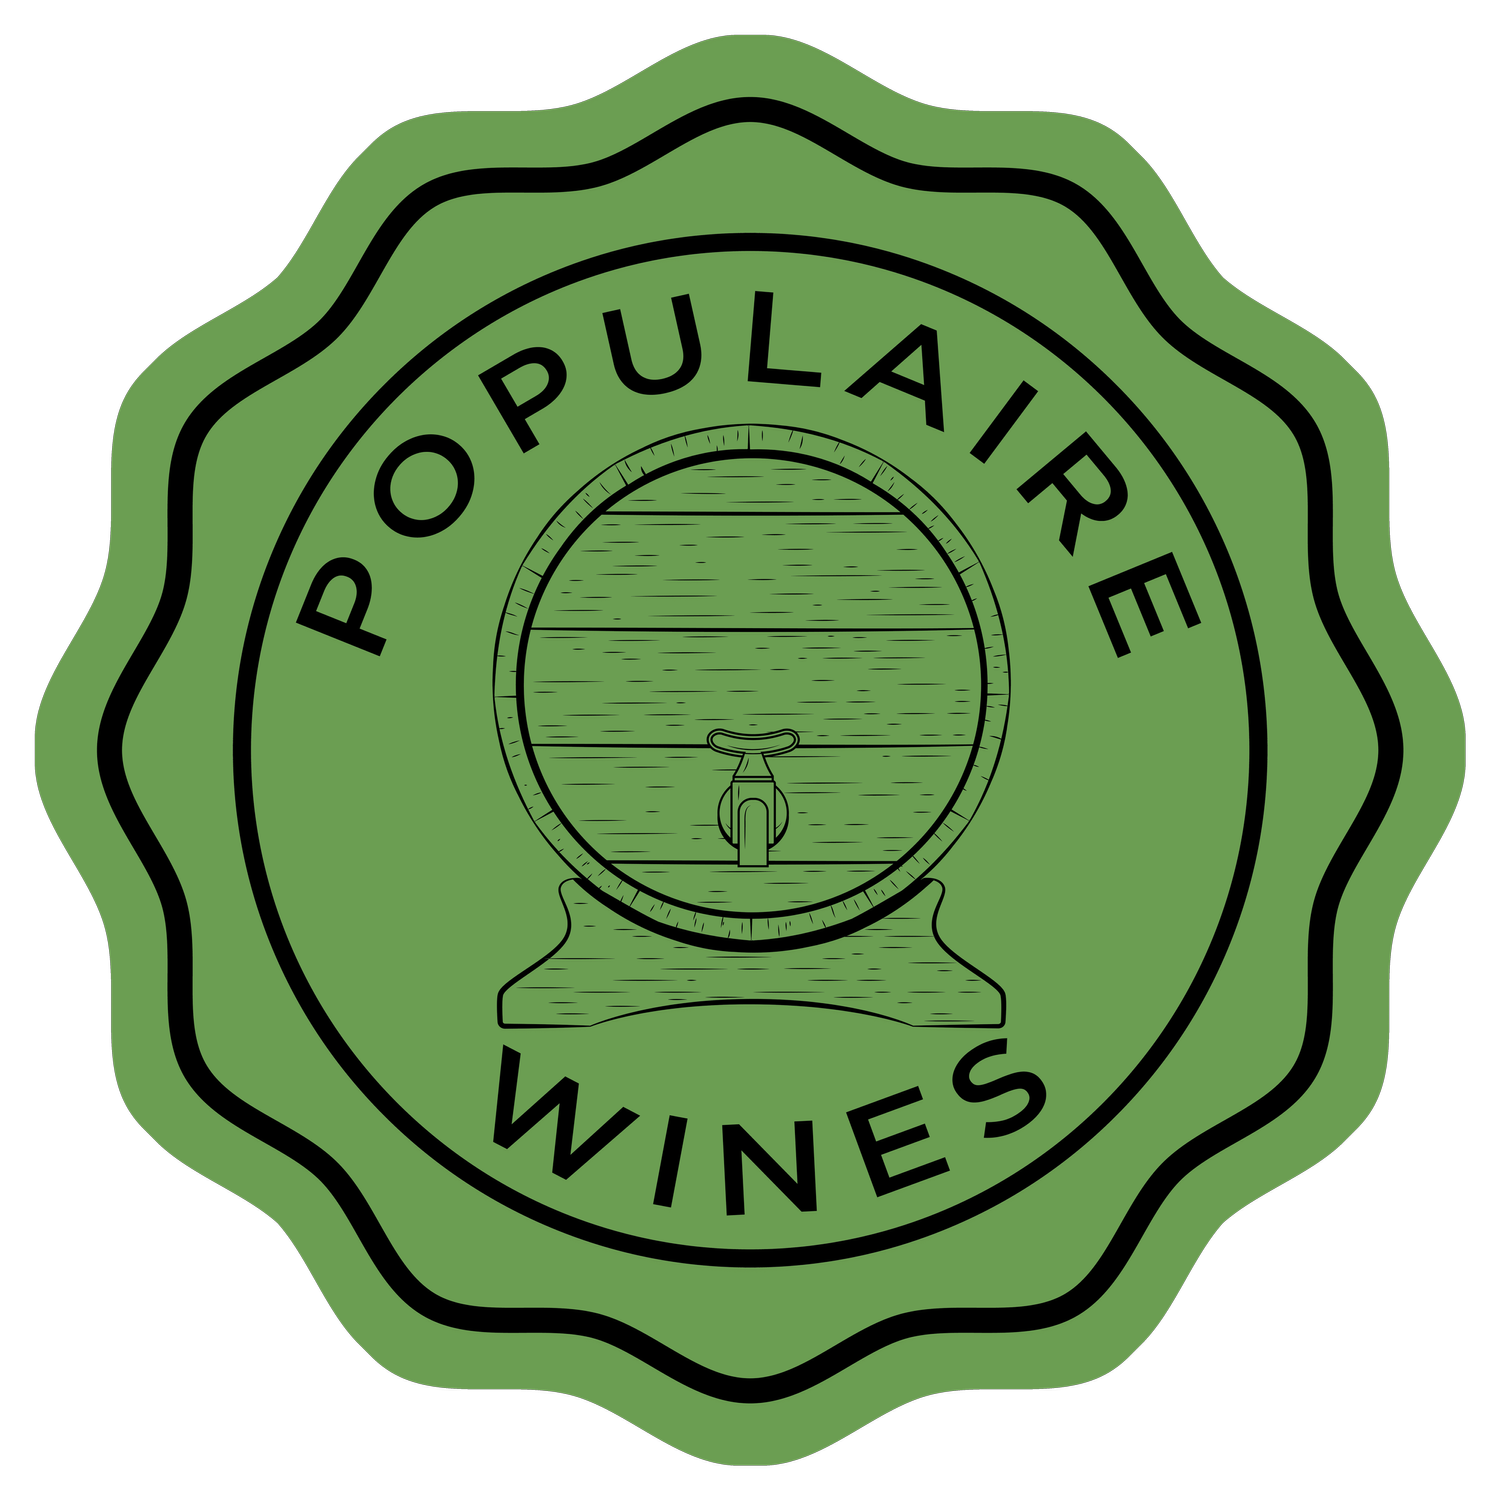 Populaire Wines